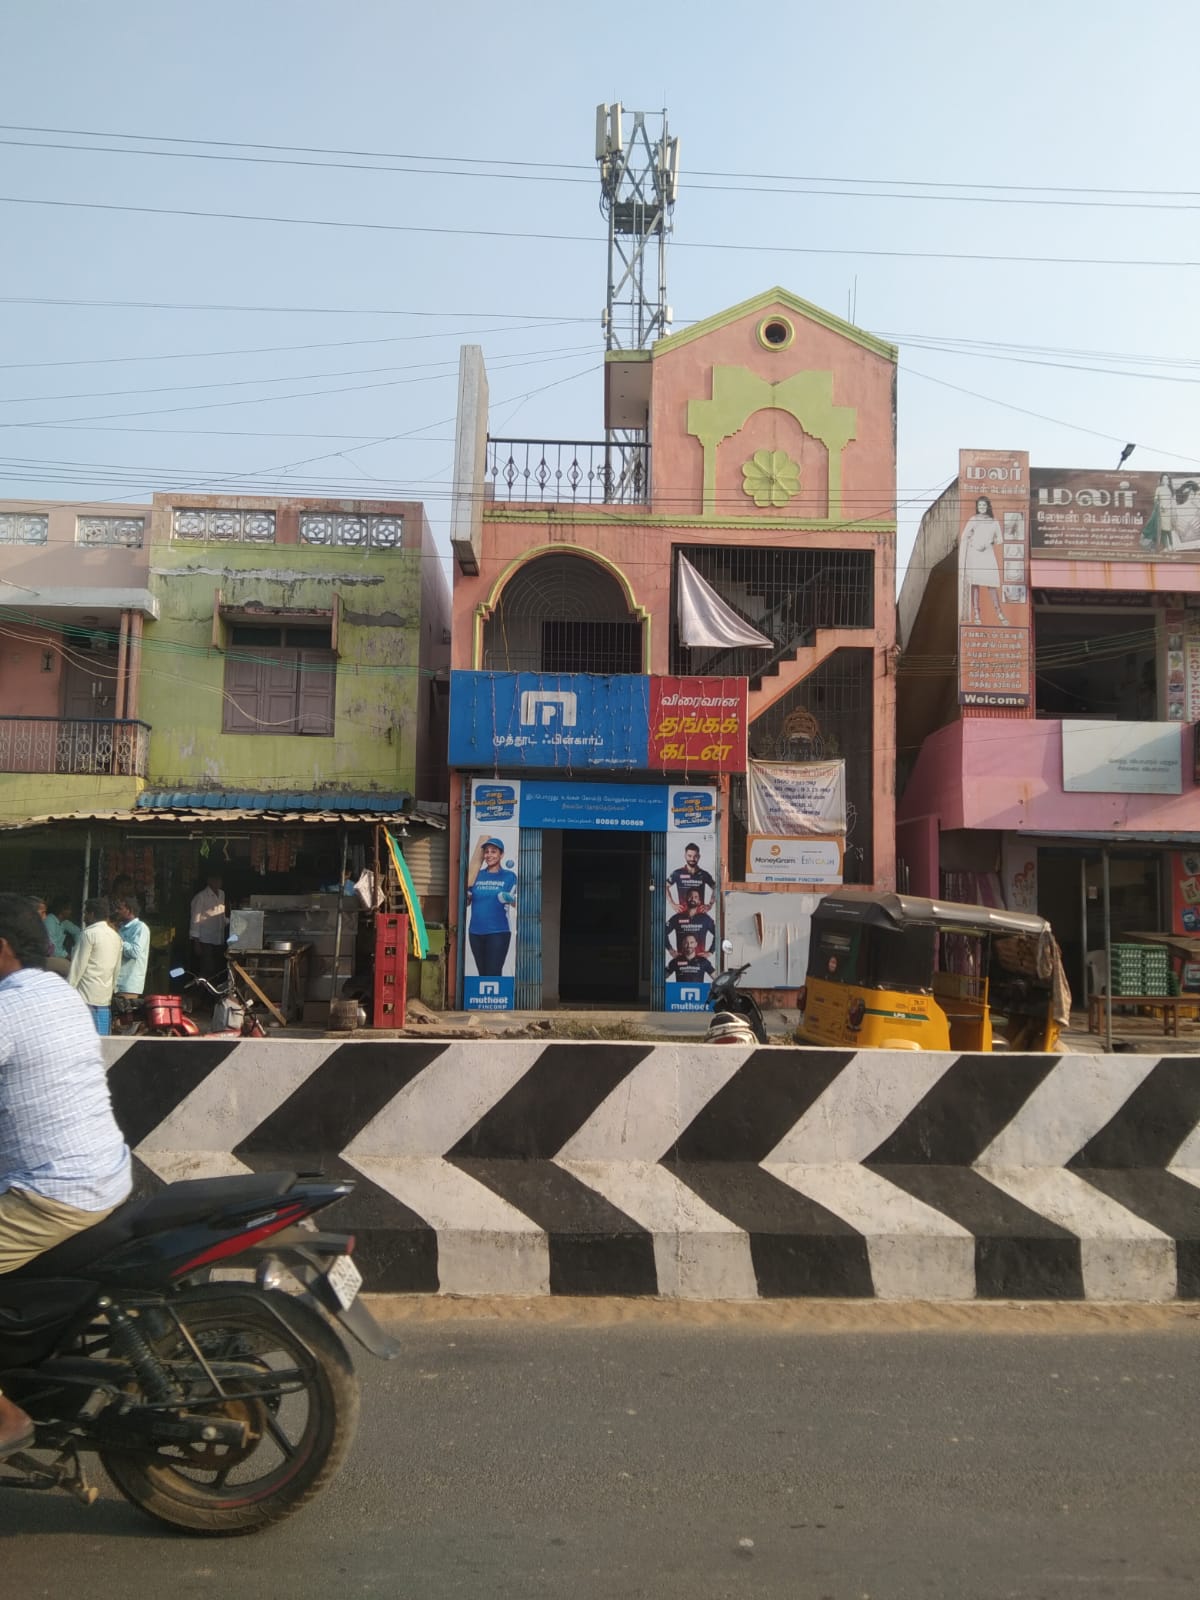 Muthoot Fincorp Gold Loan Services in Thiruvanthipuram Main Road, Cuddalore, Tamil Nadu